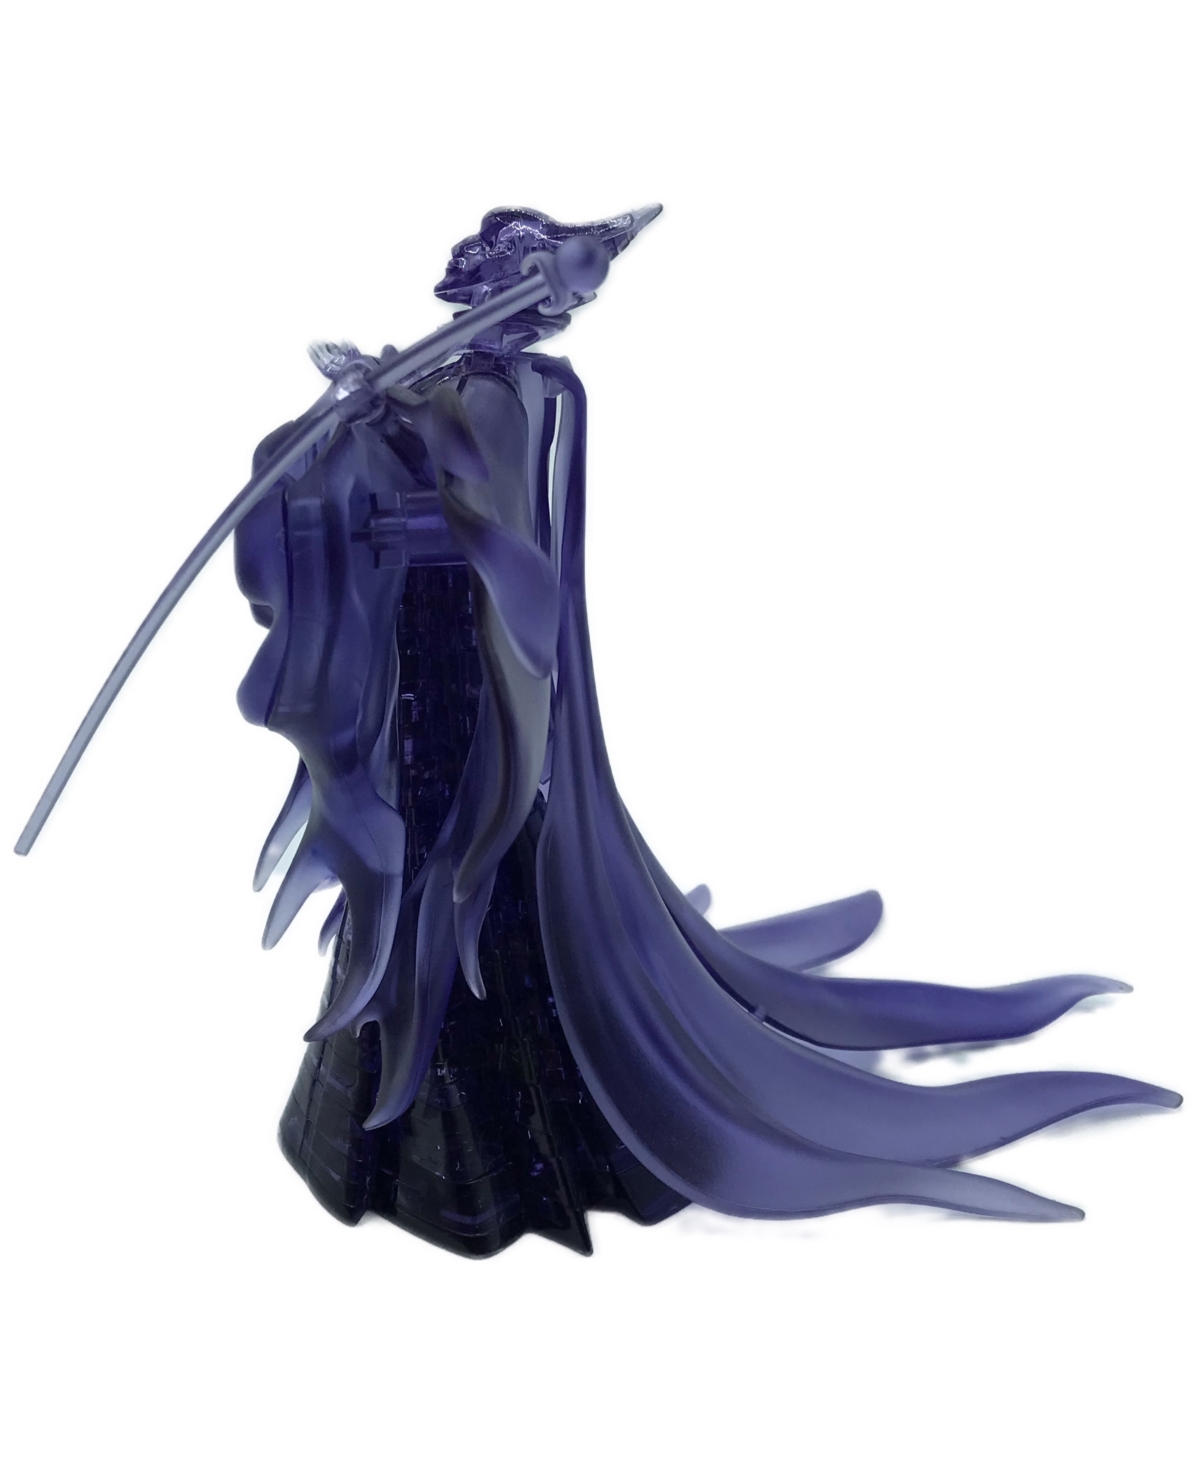 Shop Bepuzzled 3d Disney Maleficent Crystal Puzzle Set In Dark Purple